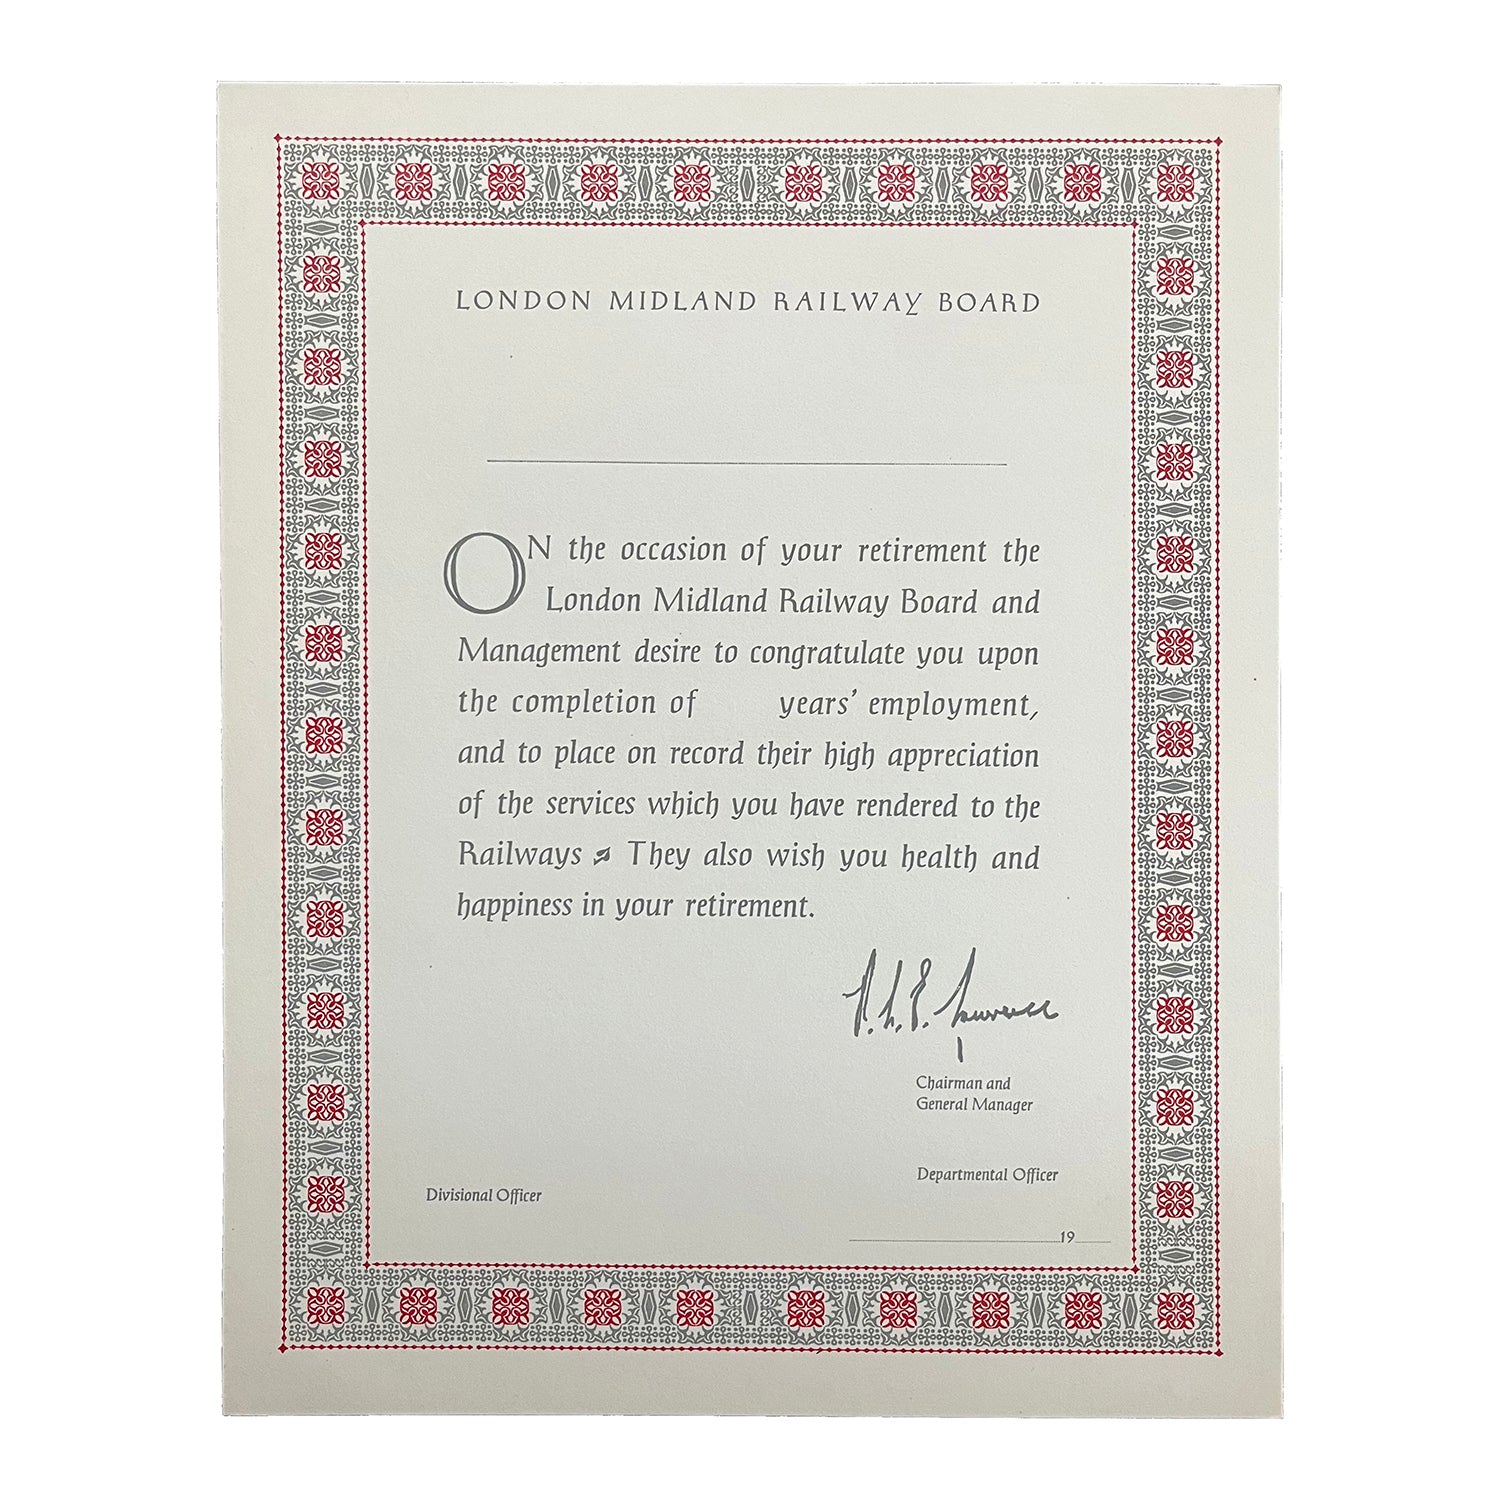 staff retirement certificate, published by British Railways (London Midland Region), printed by the Curwen Press, c. 1960